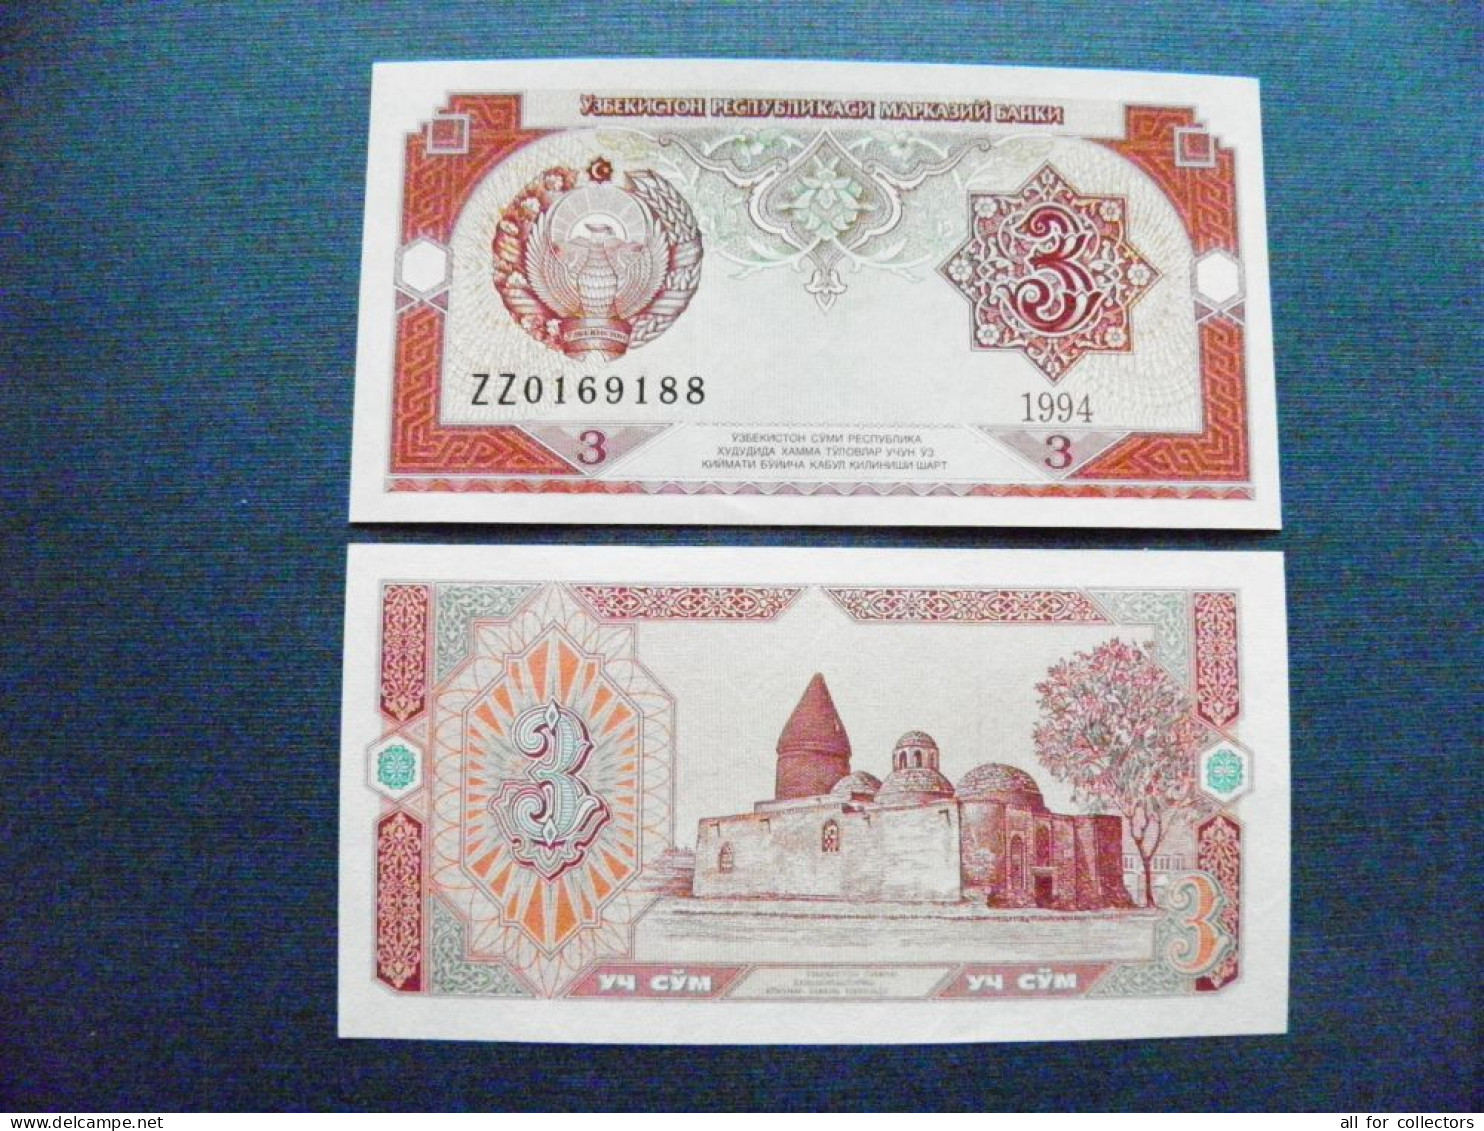 Banknote Uzbekistan Unc 3 Sum 1994 P-74 Coat Of Arms Mosque Bukhara - Uzbekistán